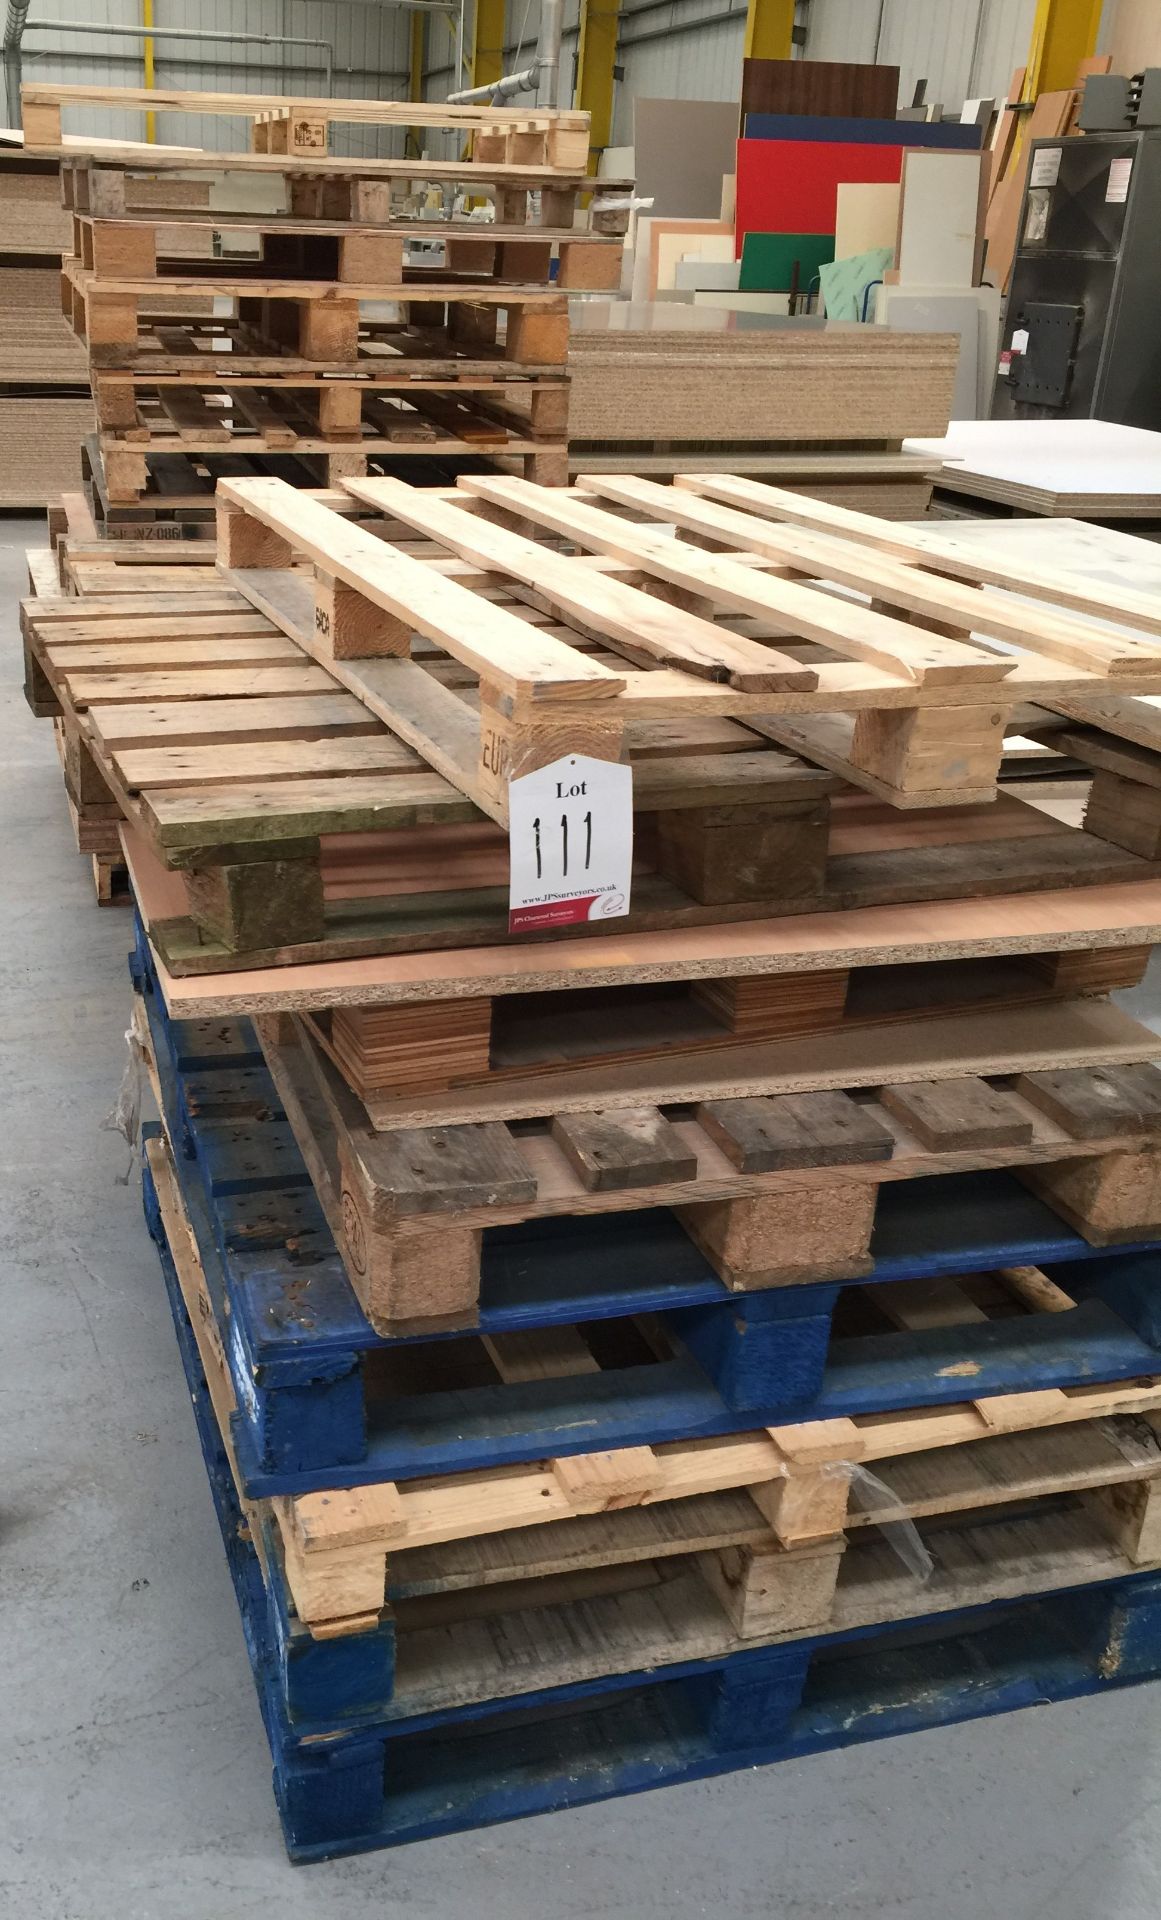 Quantity of wood pallets